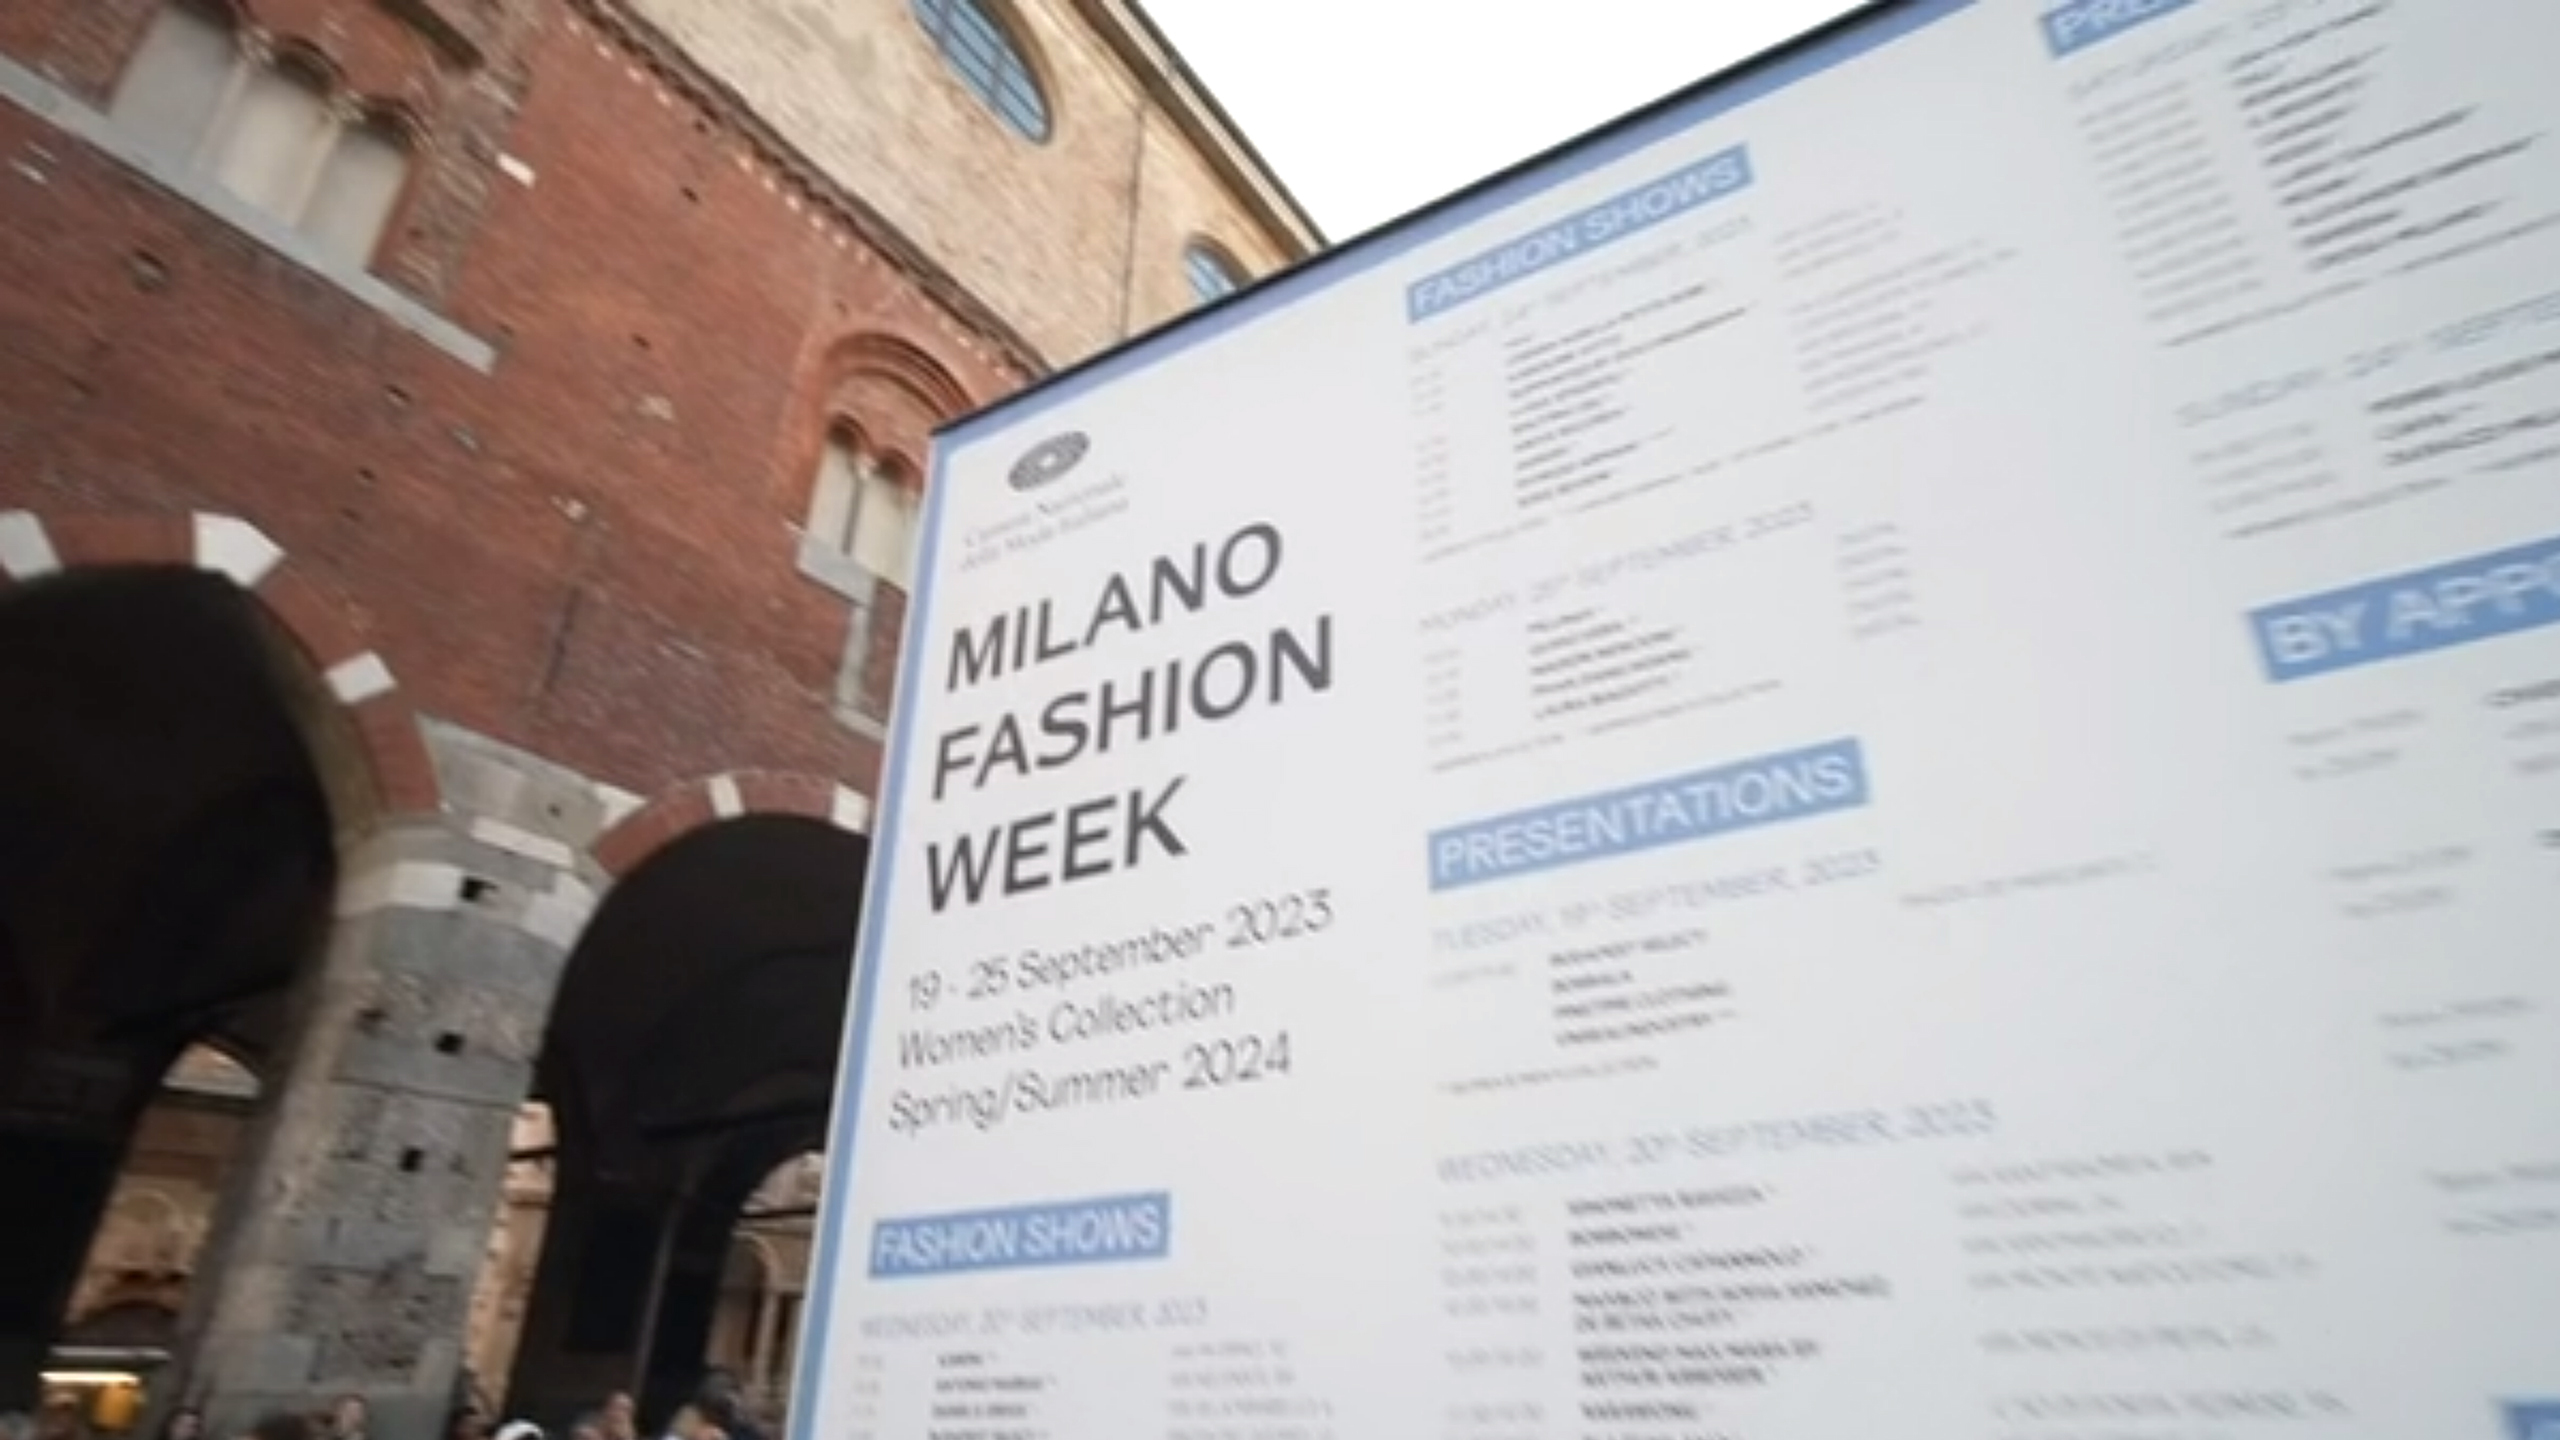 Milan Fashion Week Women's 2021 (February 2021), Milano - Italy